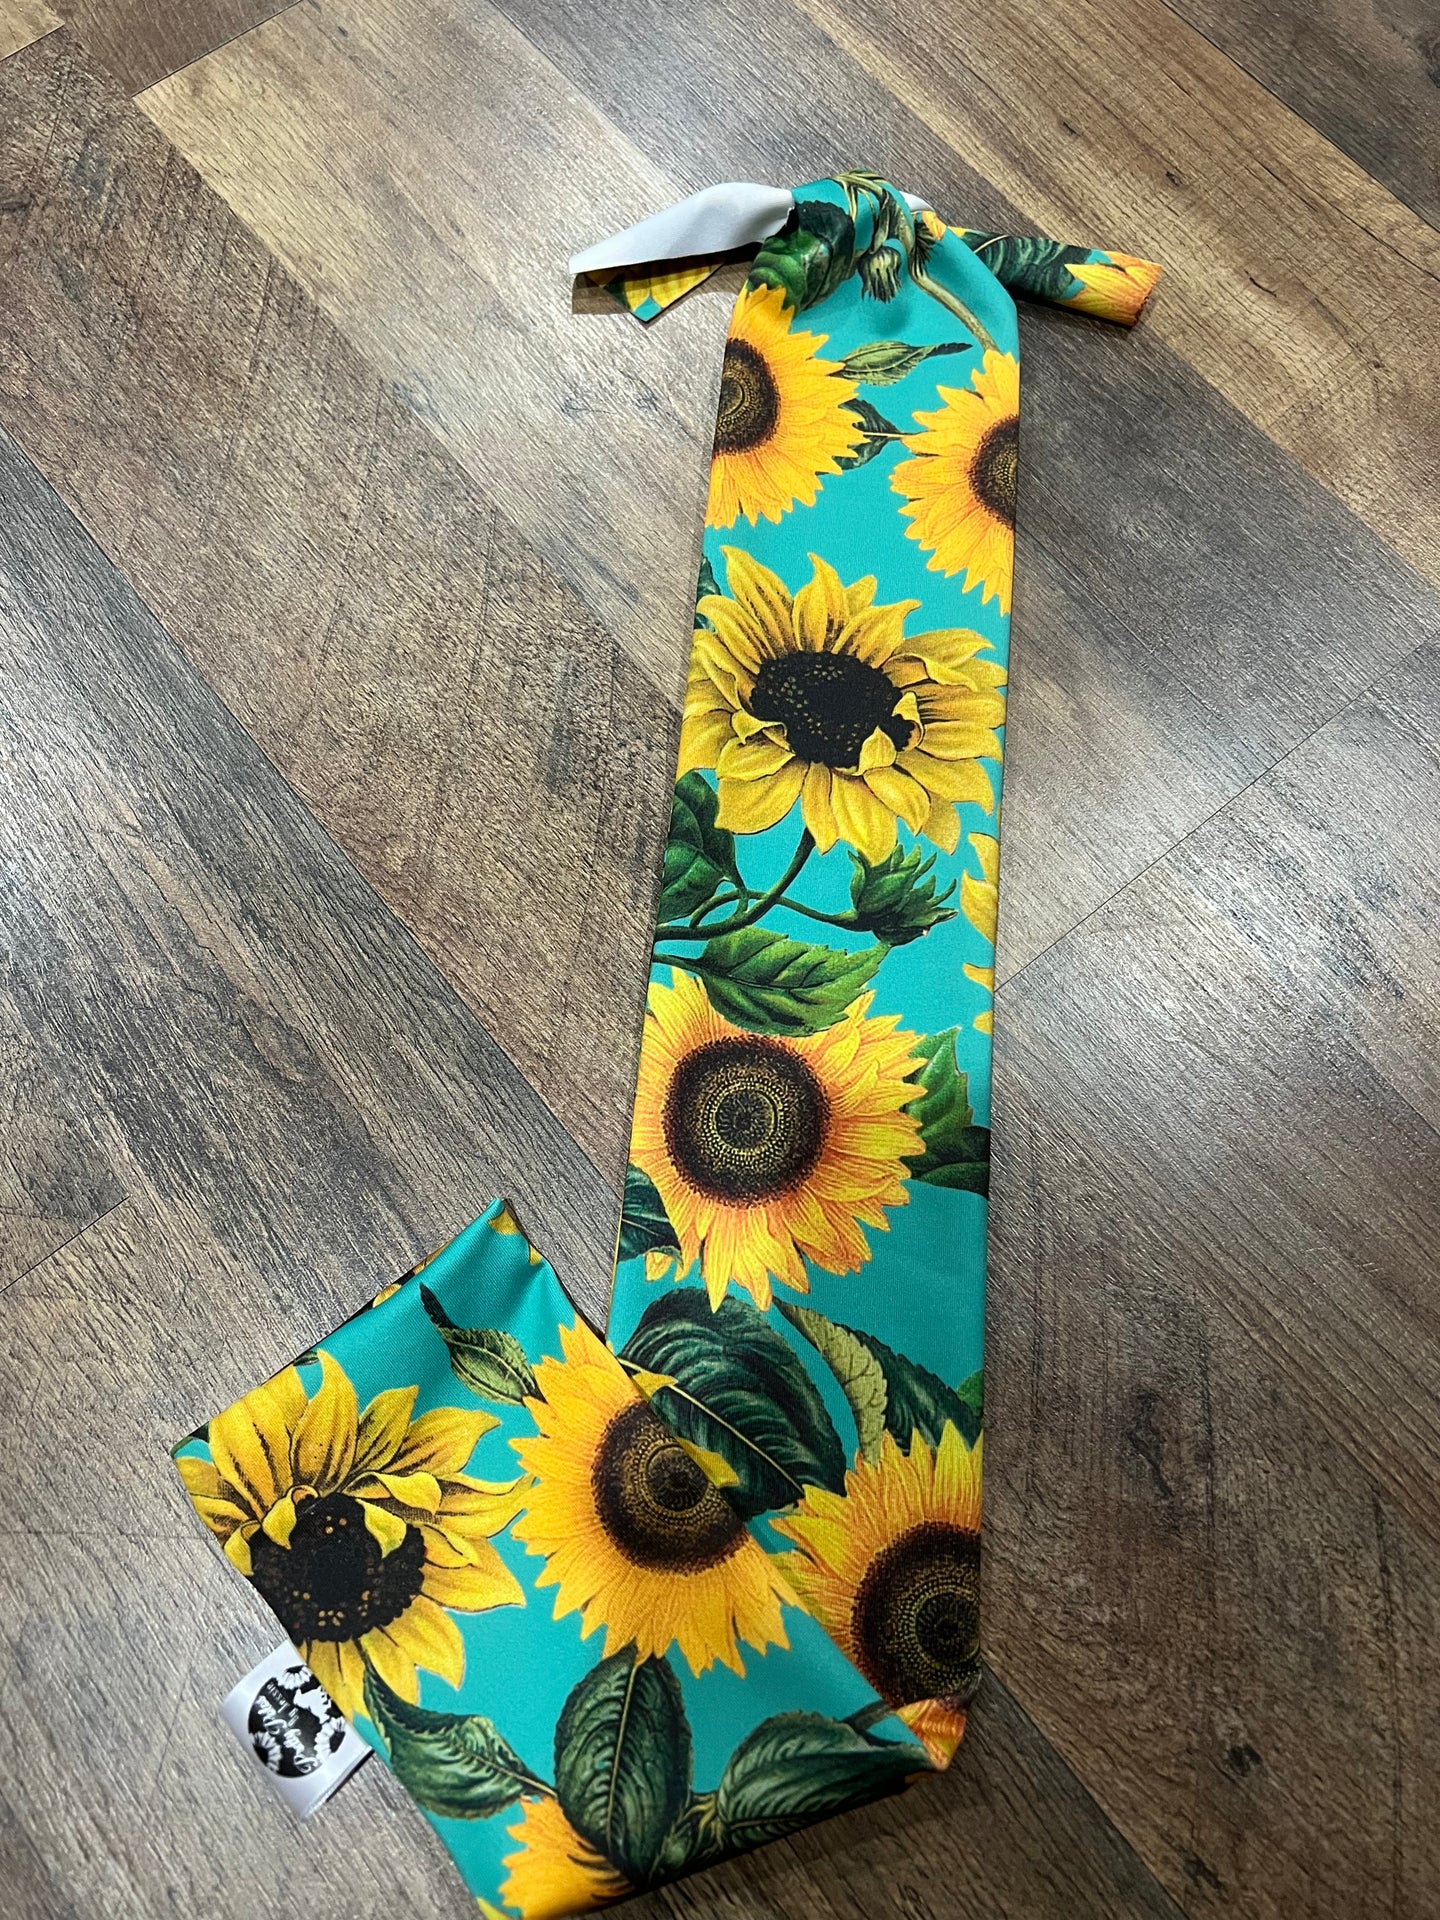 Turquoise Sunflower tailbag